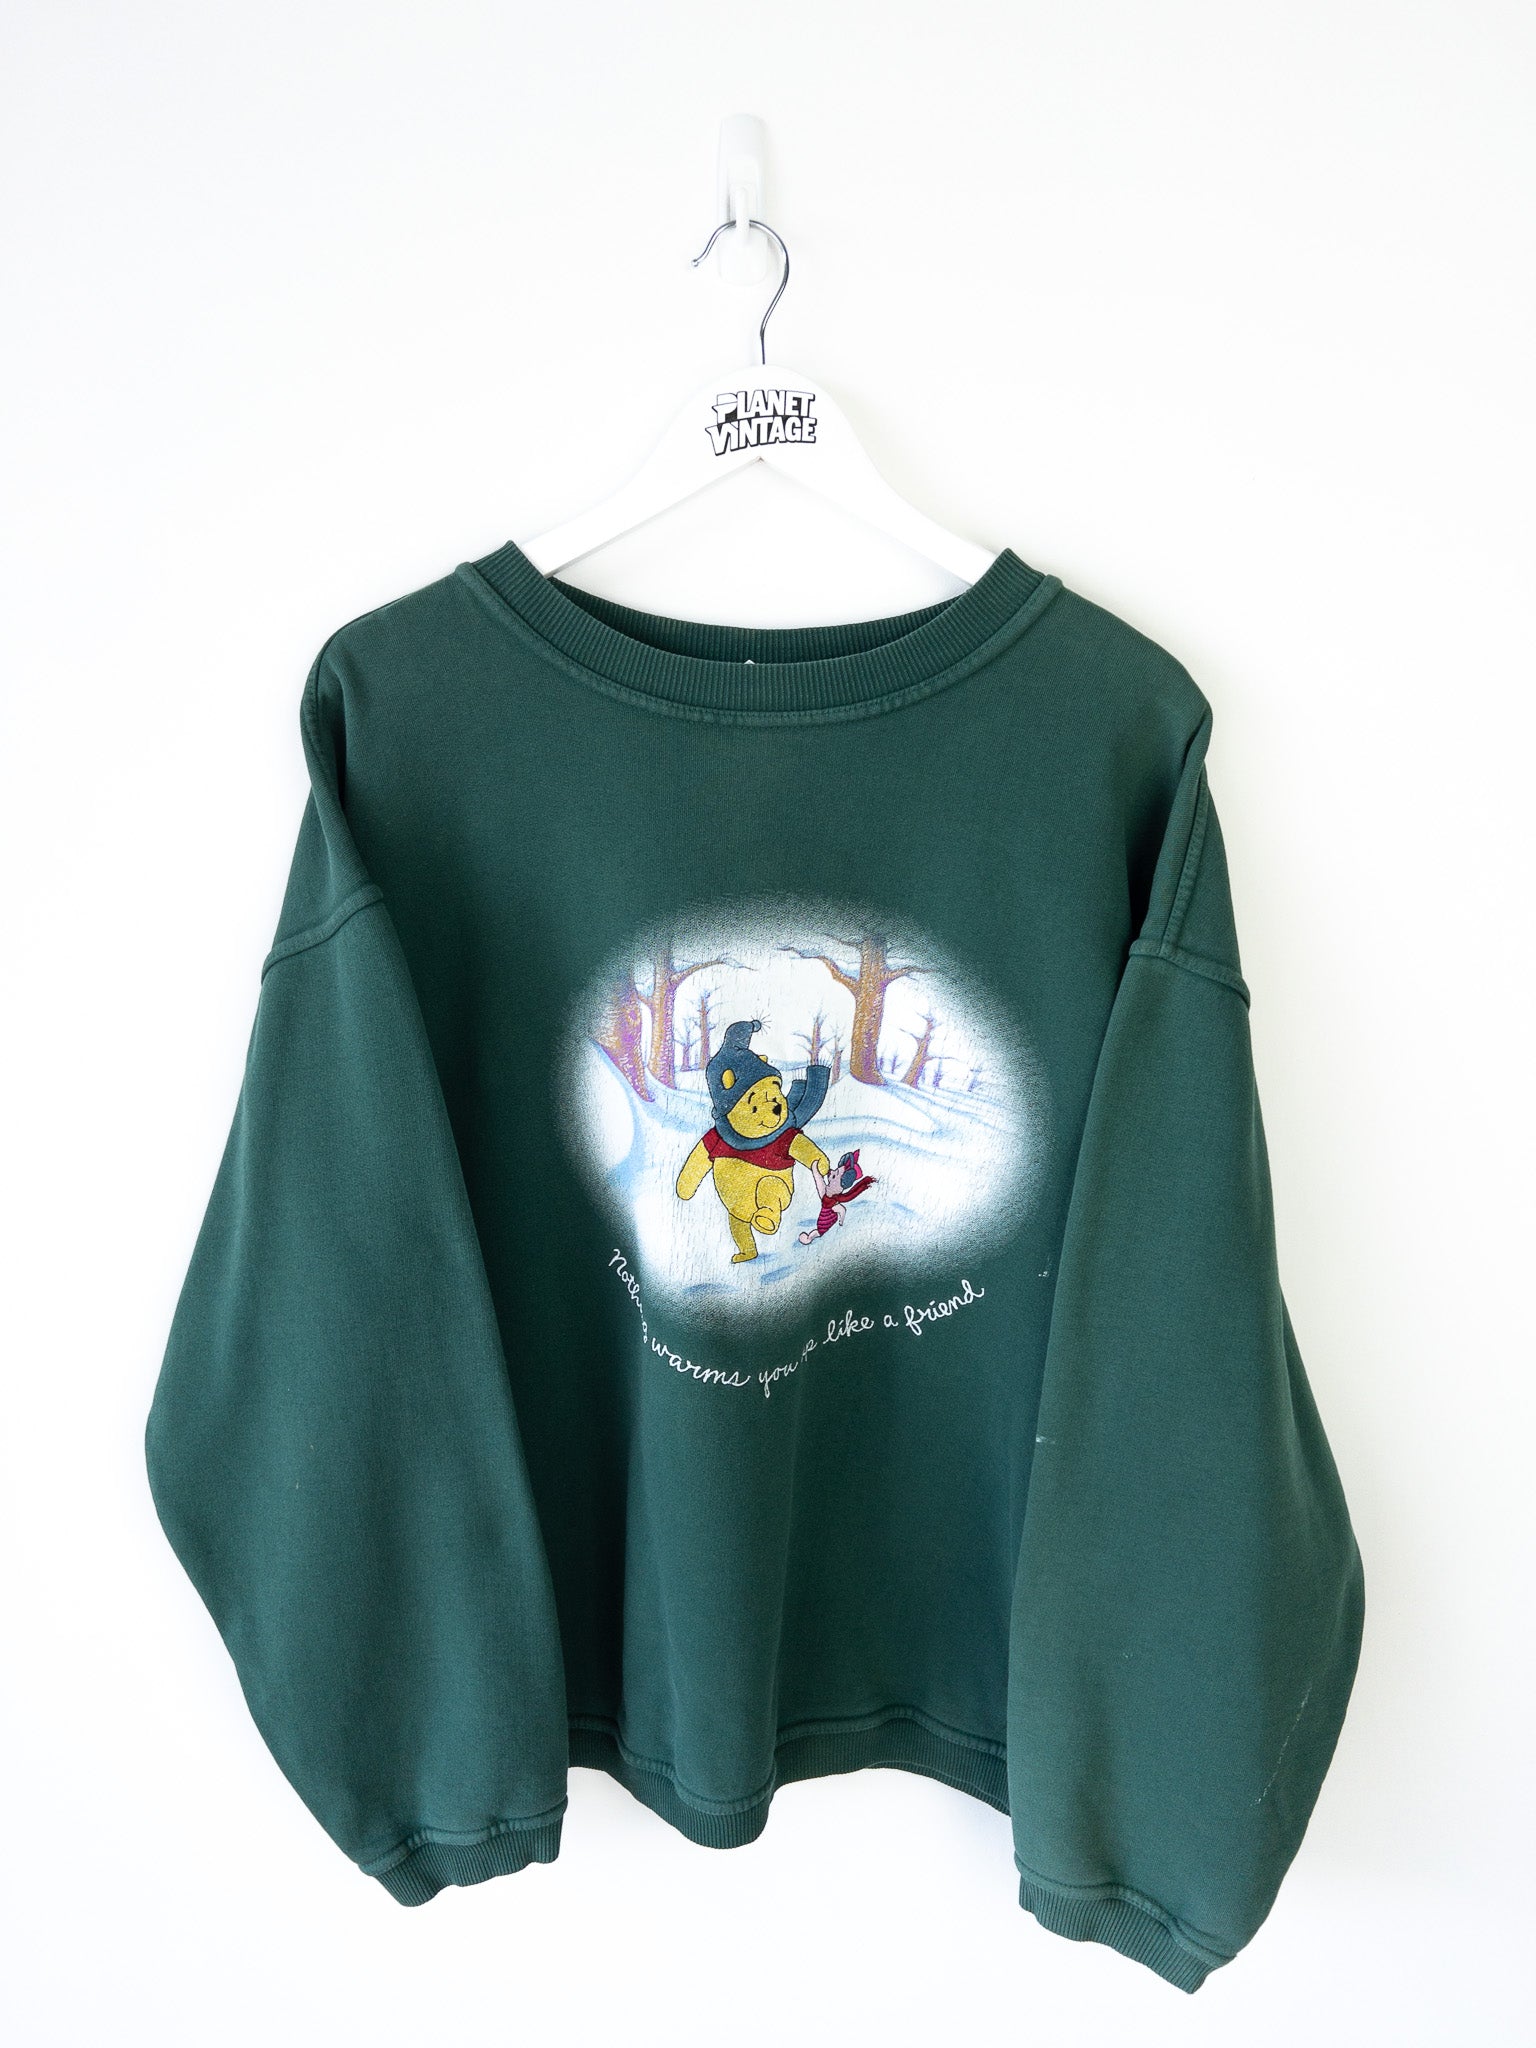 Vintage Pooh & Piglet Warm Friends Sweatshirt (L)